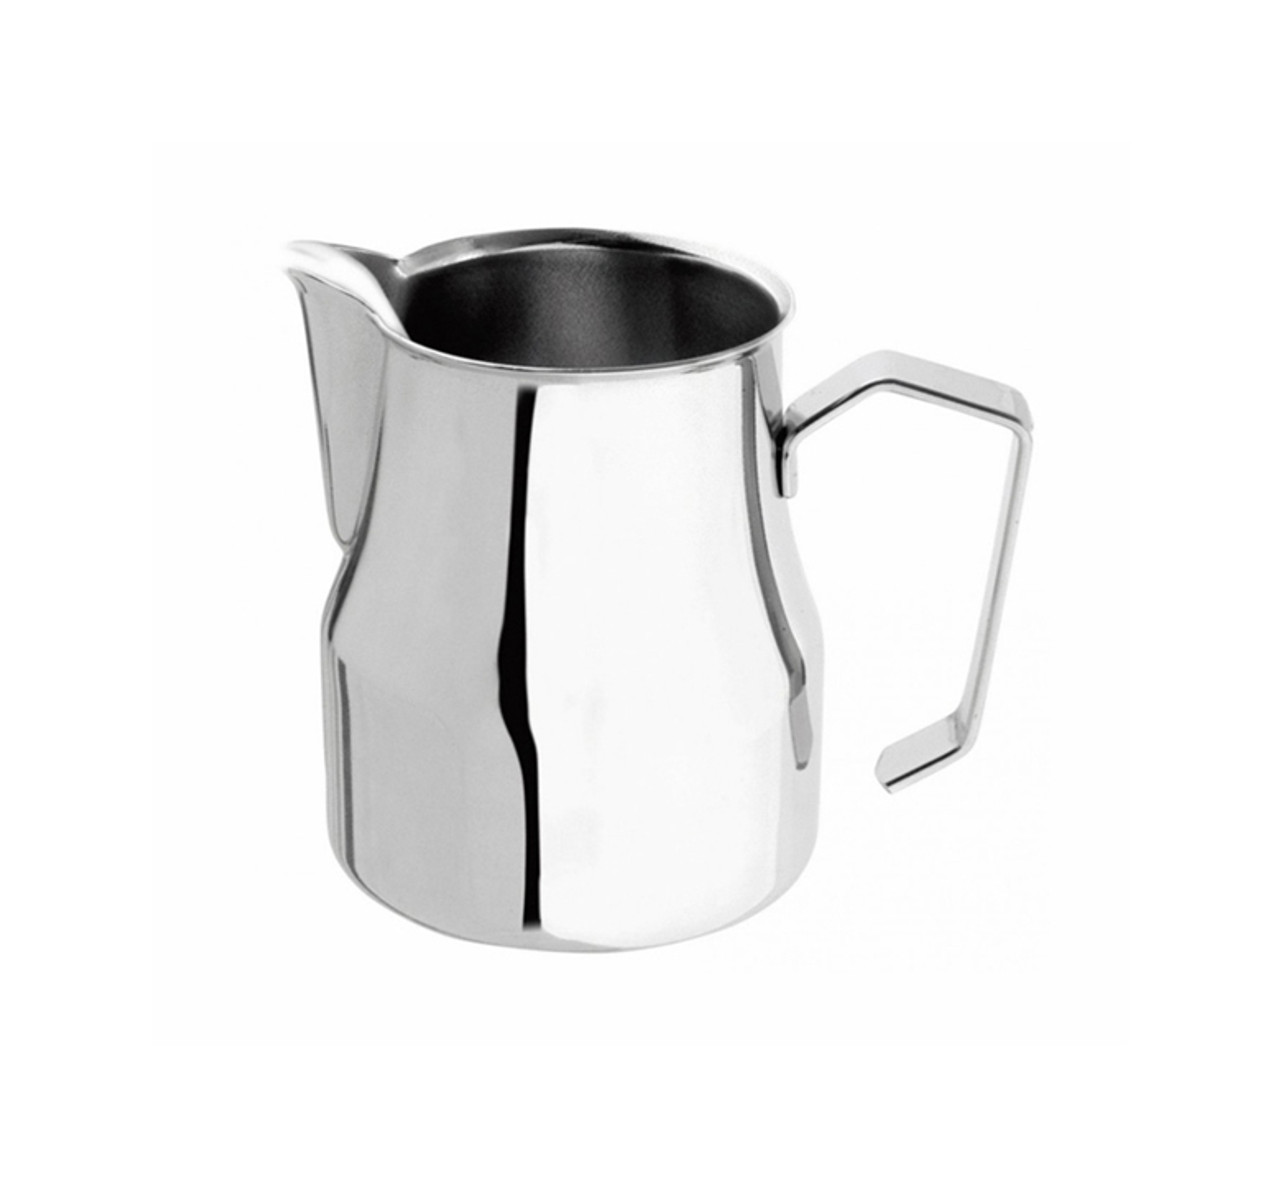 Latte art milk steaming pitcher - illy Shop